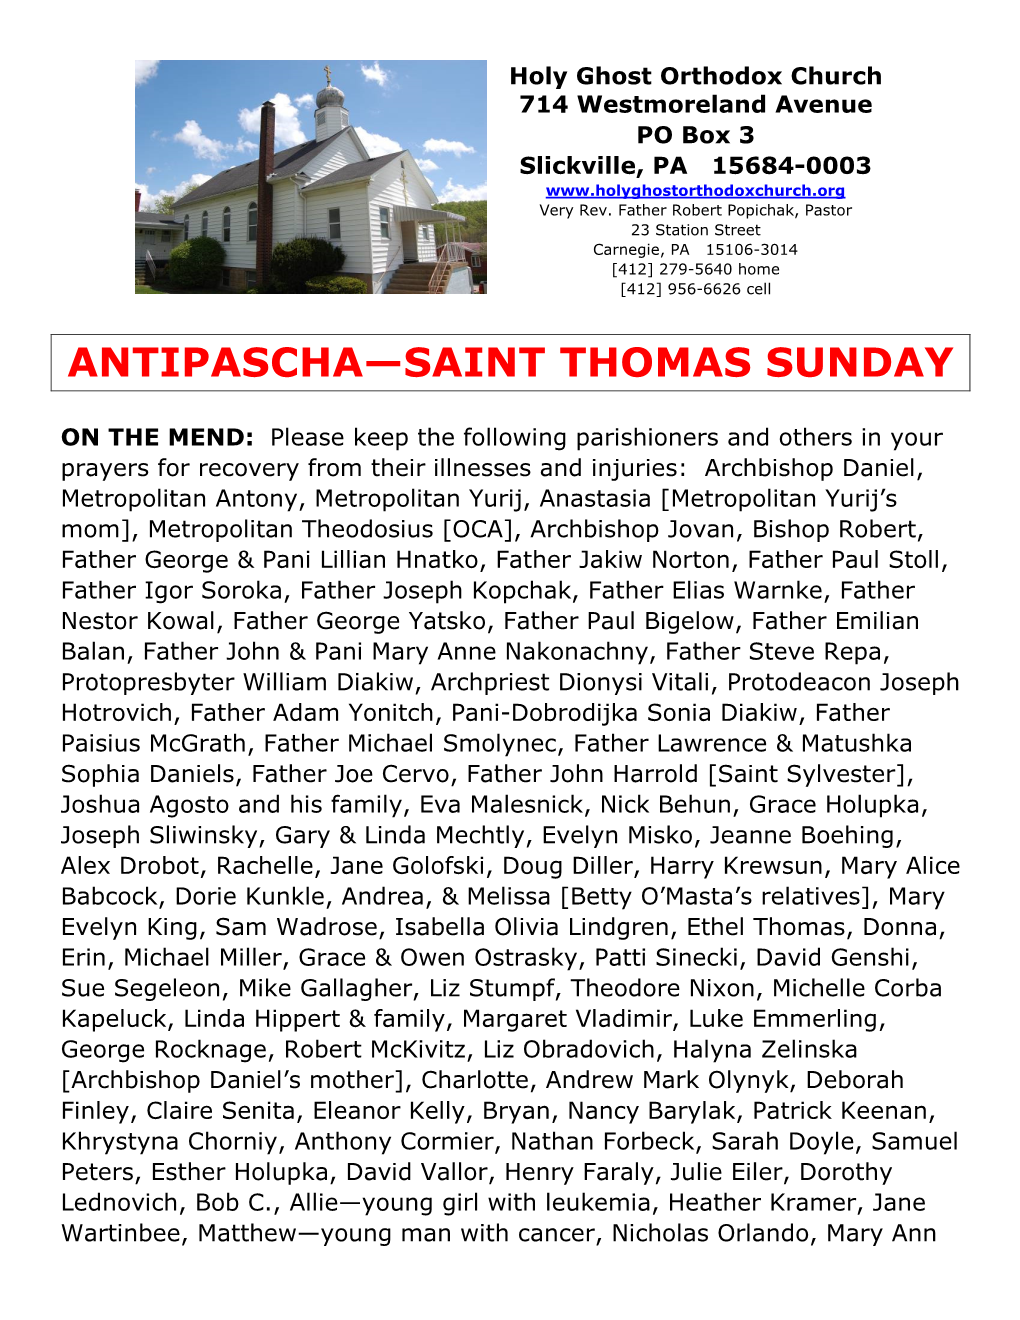 Antipascha—Saint Thomas Sunday